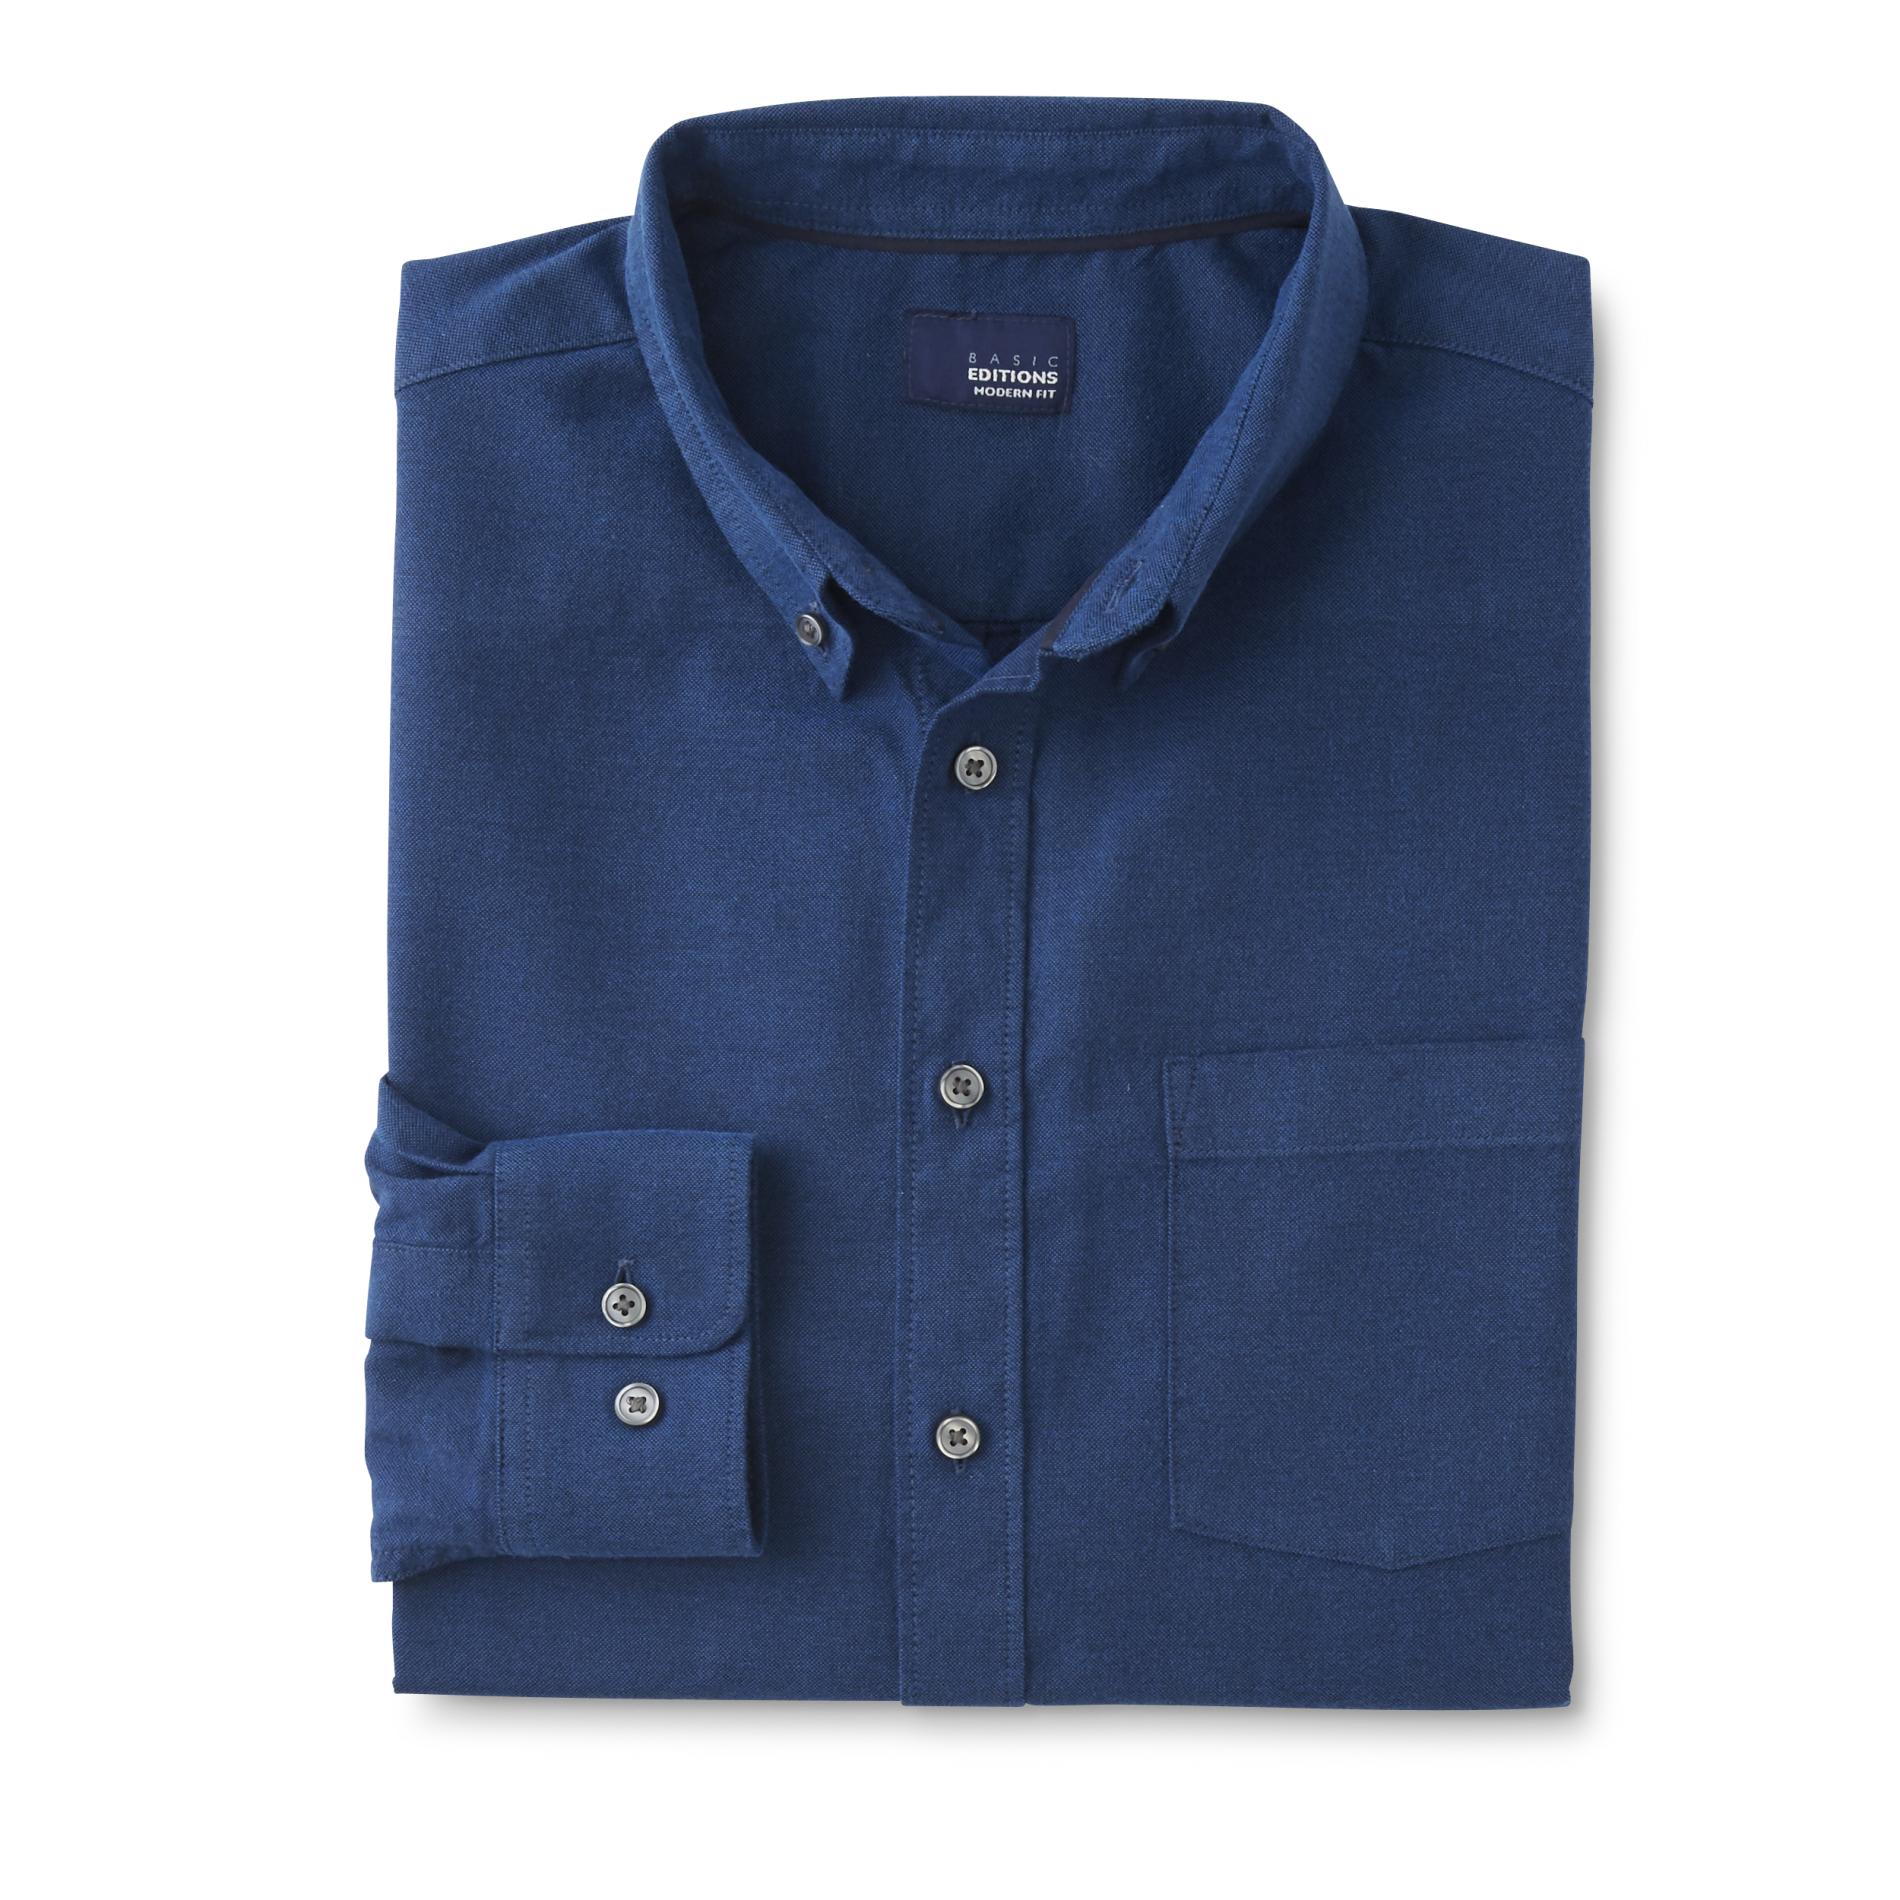 Basic Editions Men's Modern Fit Oxford Shirt